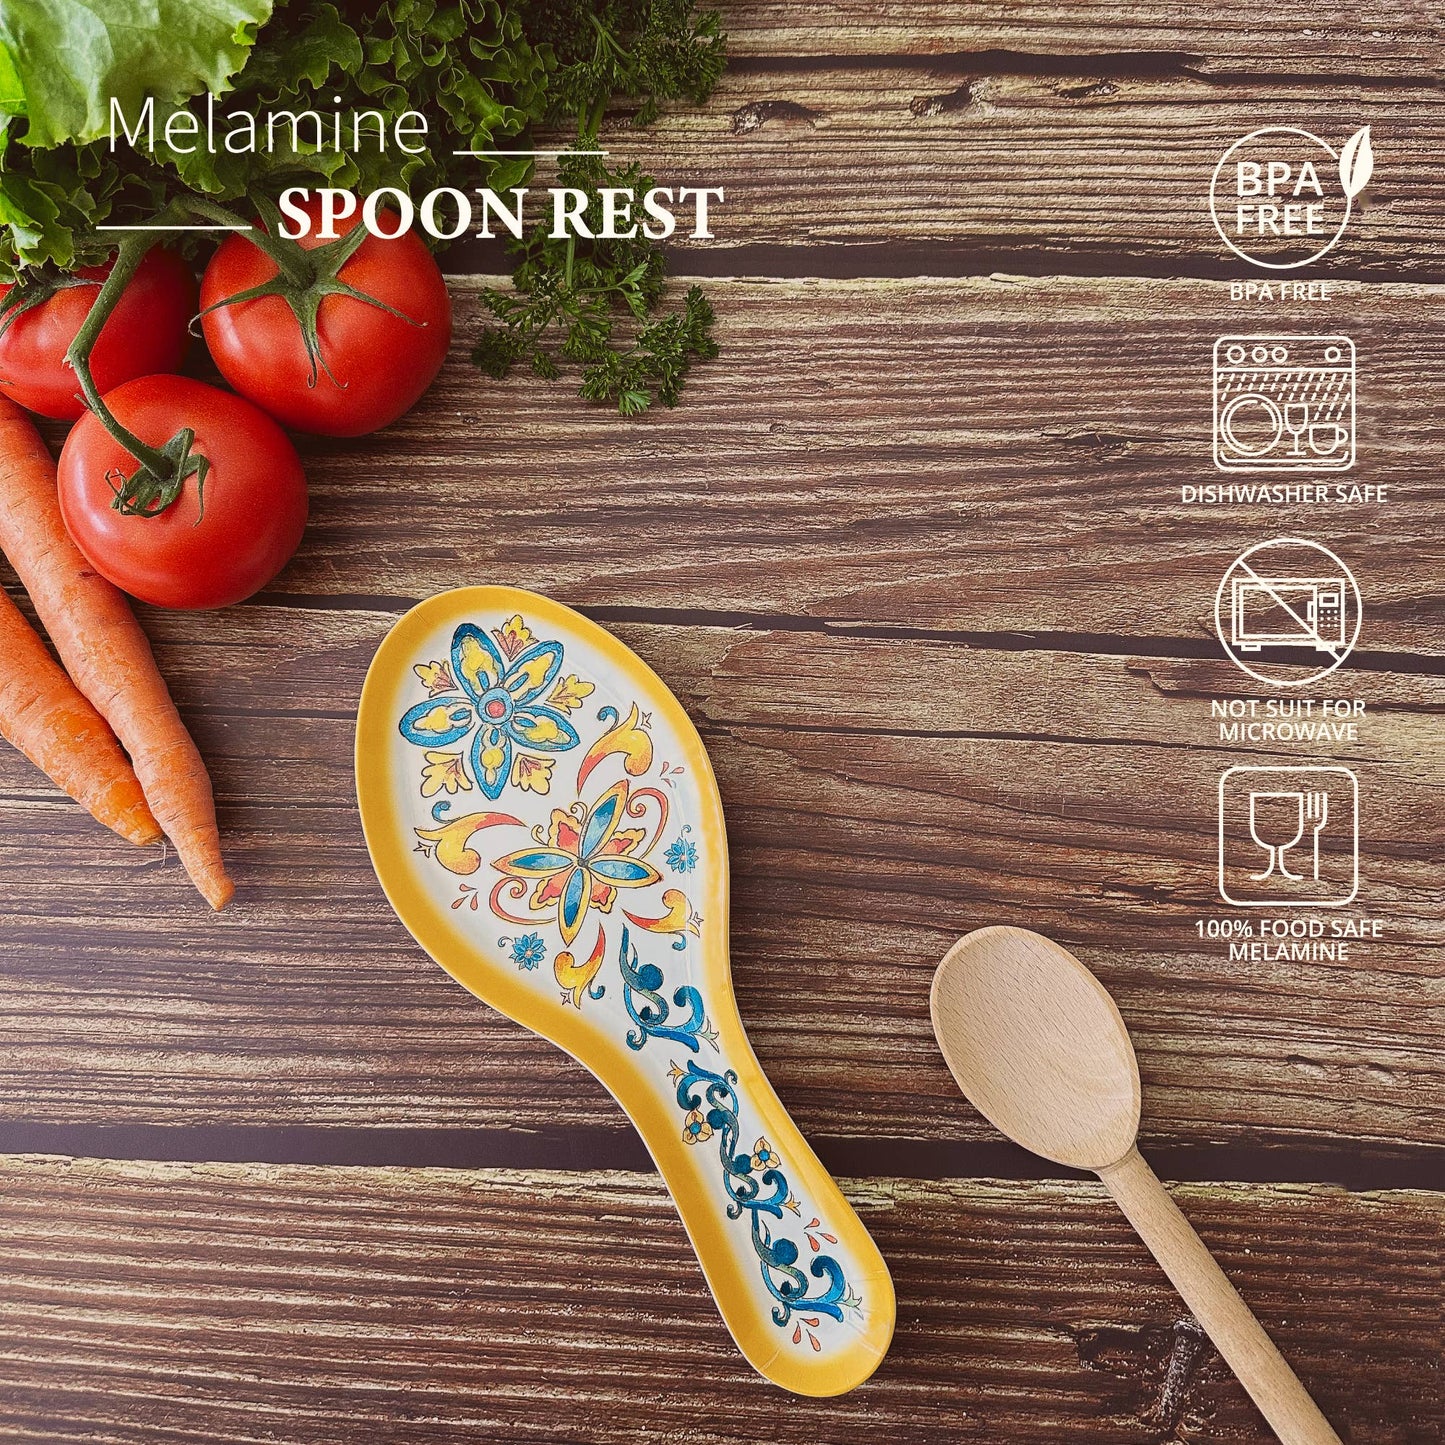 Chianti Melamine Spoon Rest